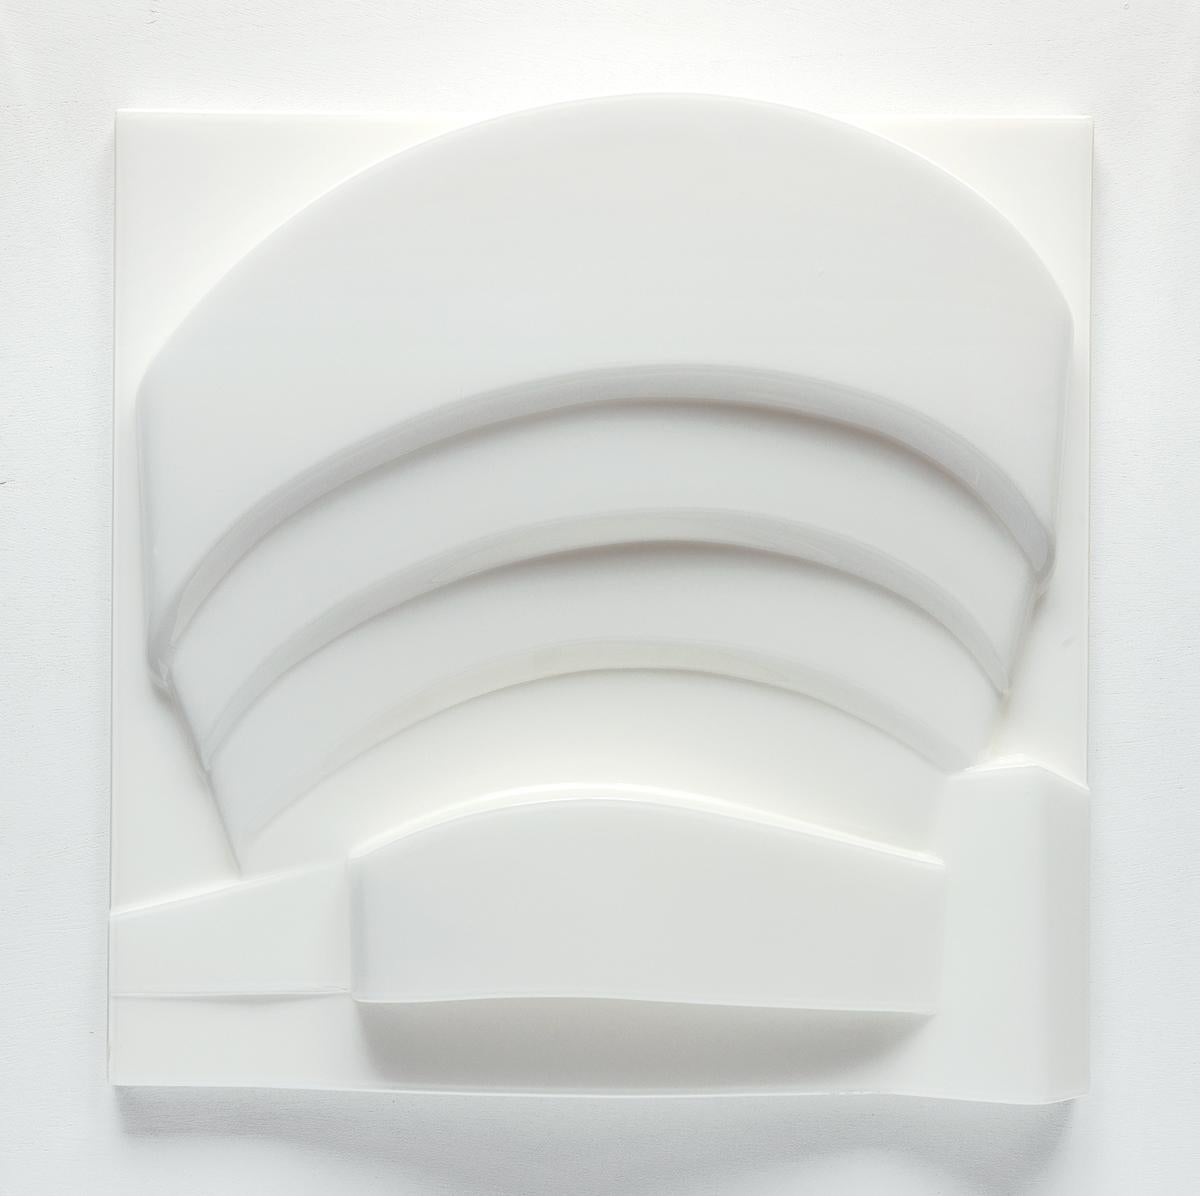 Figurative Sculpture Richard Hamilton - Guggenheim (blanc)